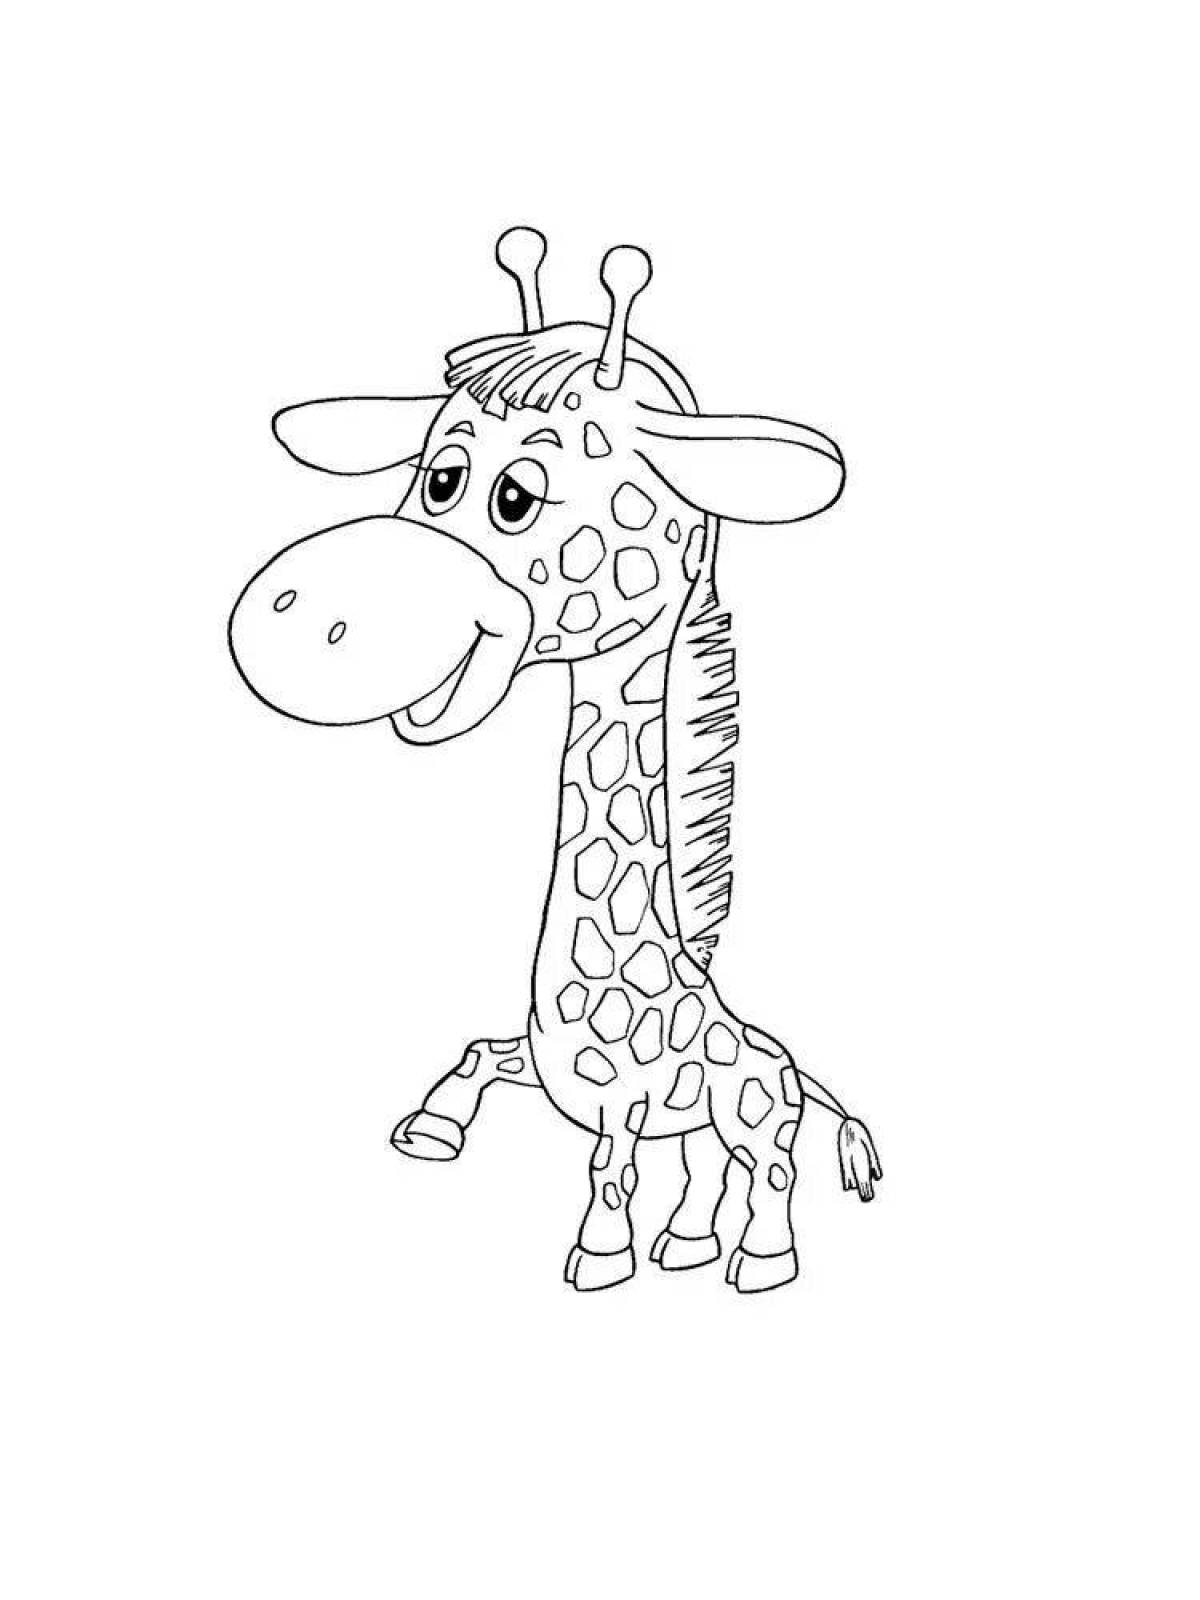 Great coloring giraffe for preschoolers